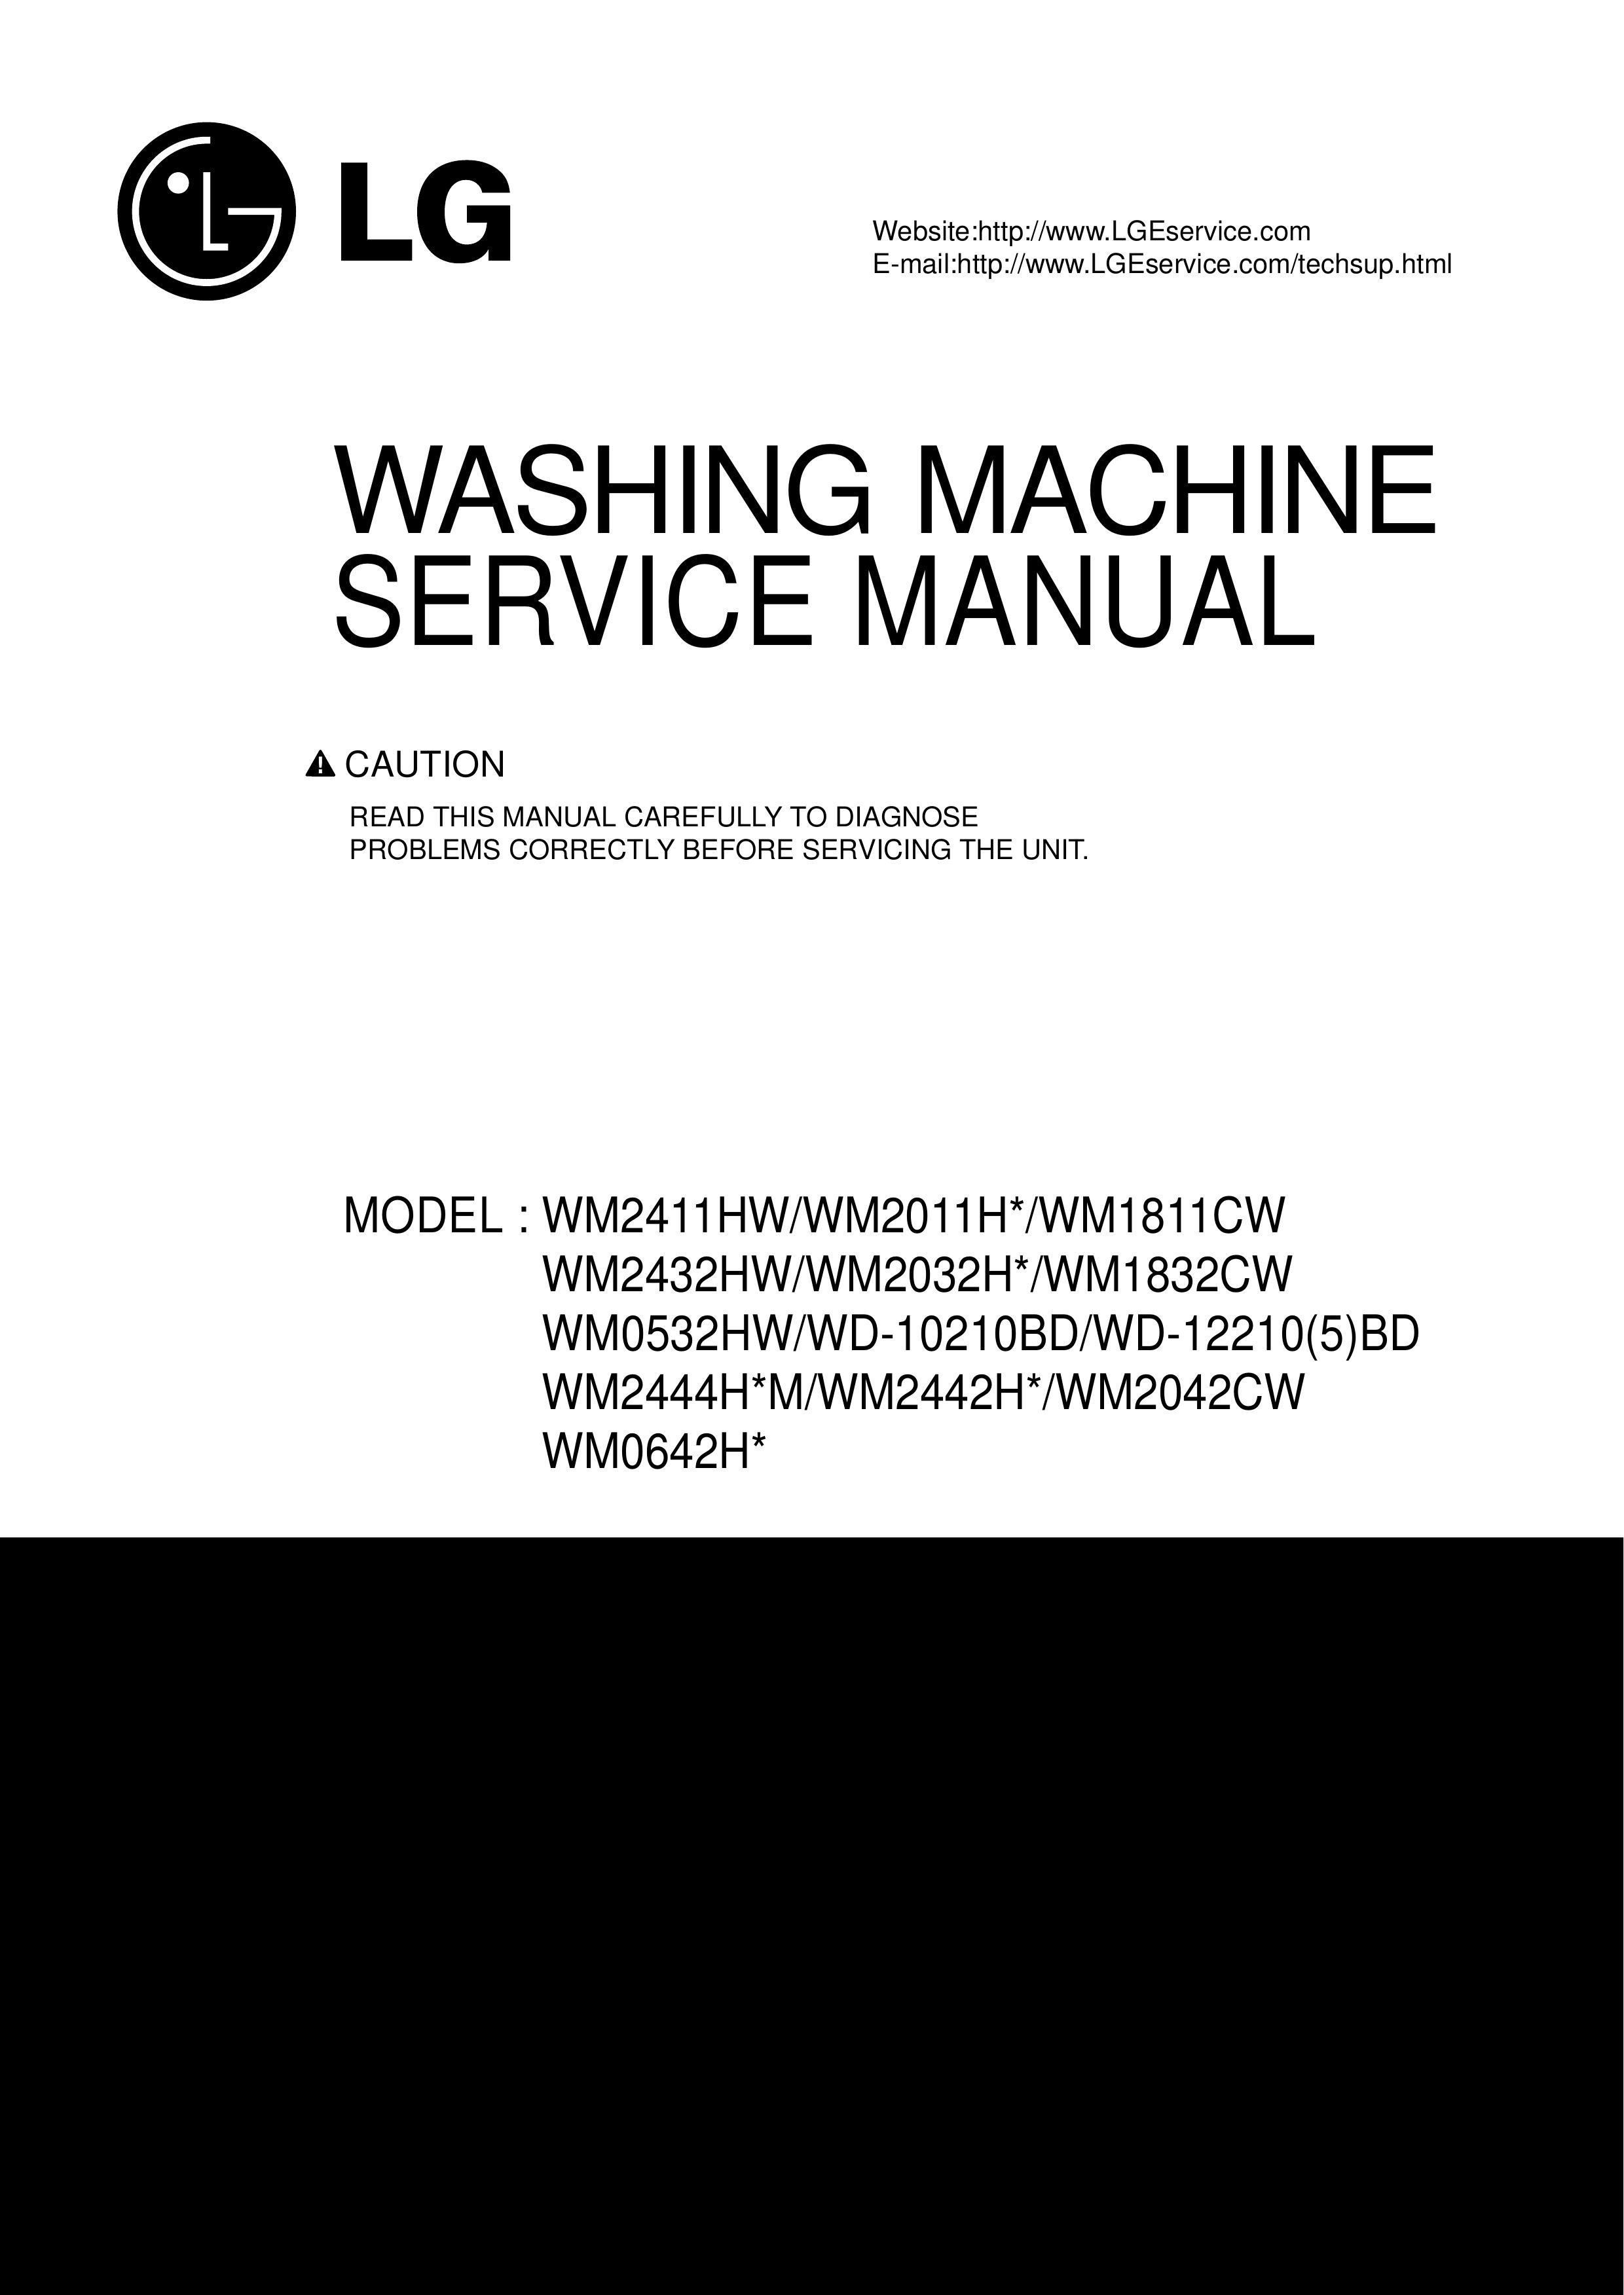 LG Electronics WM2042CW Washer/Dryer User Manual